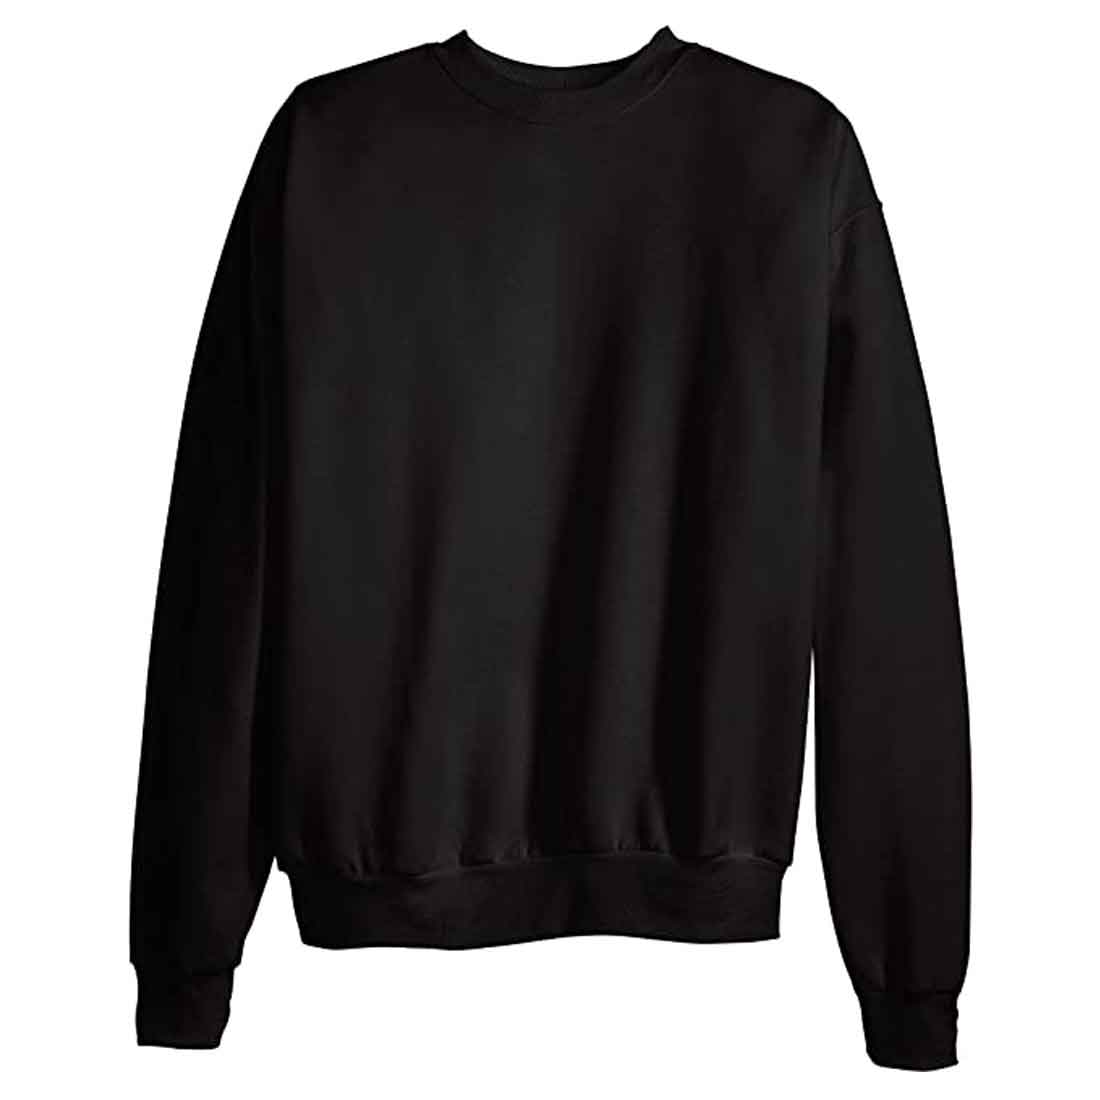 Cotton Black Printed Sweatshirt for Men Full Sleeves - Sagittarius